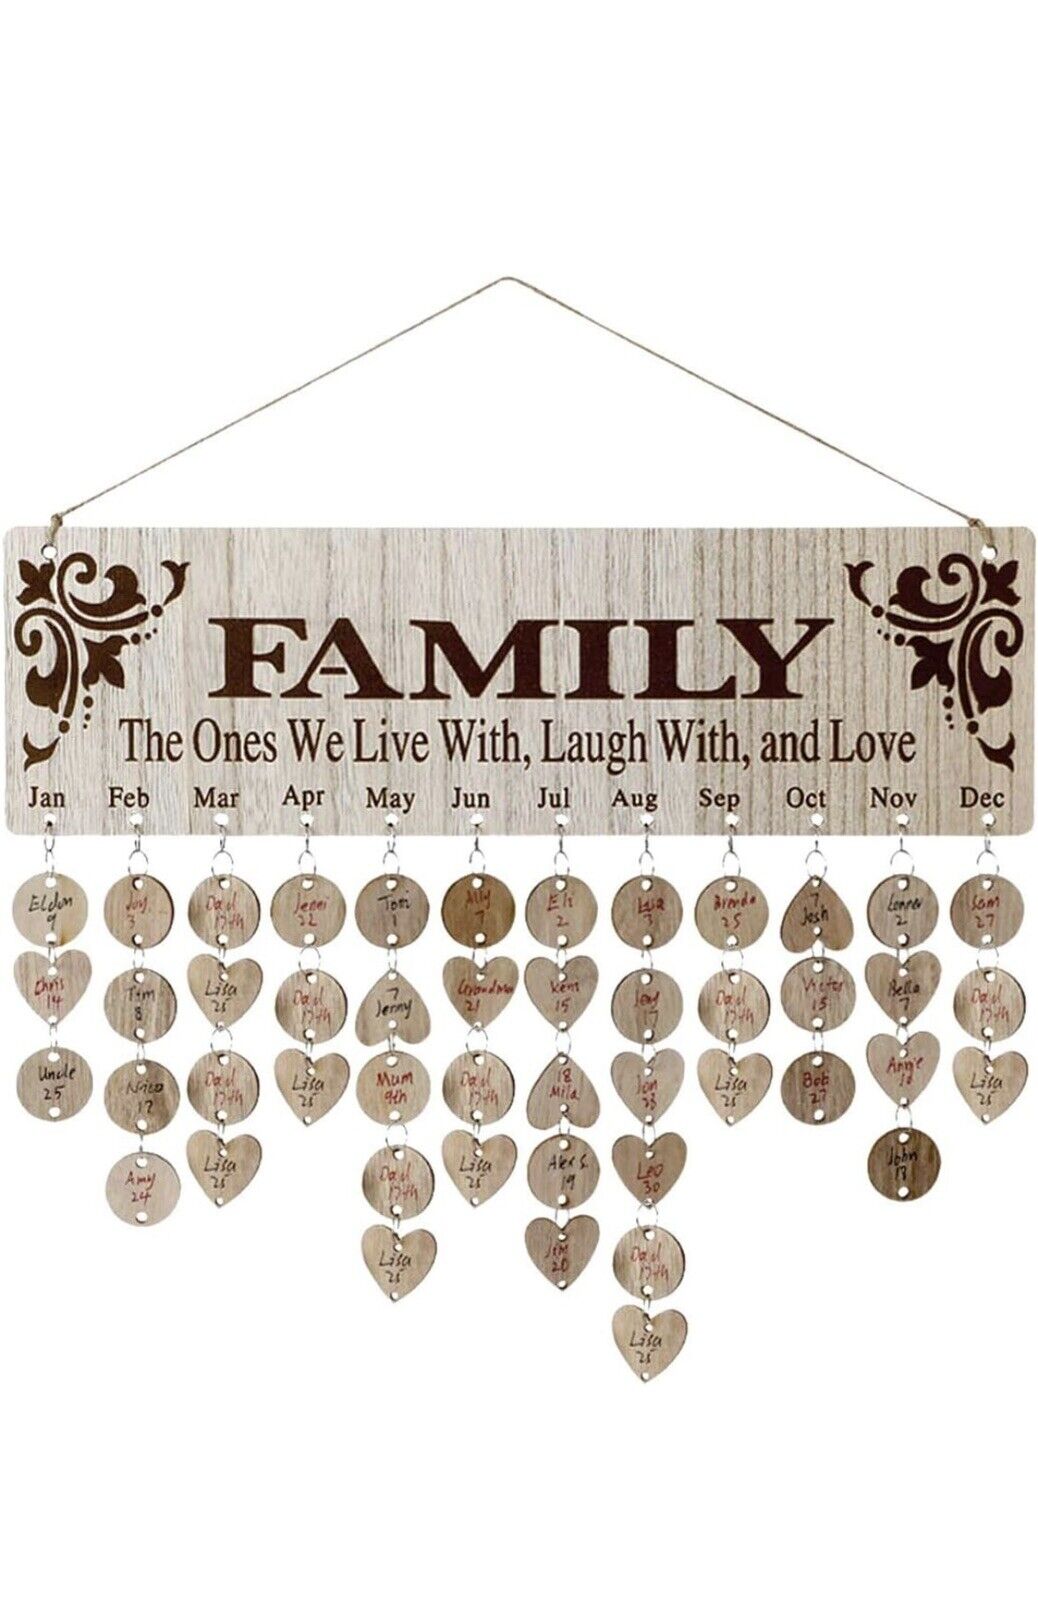 Gifts for Grandma Moms,Wooden Family Birthday Reminder Calendar Board Decorat...